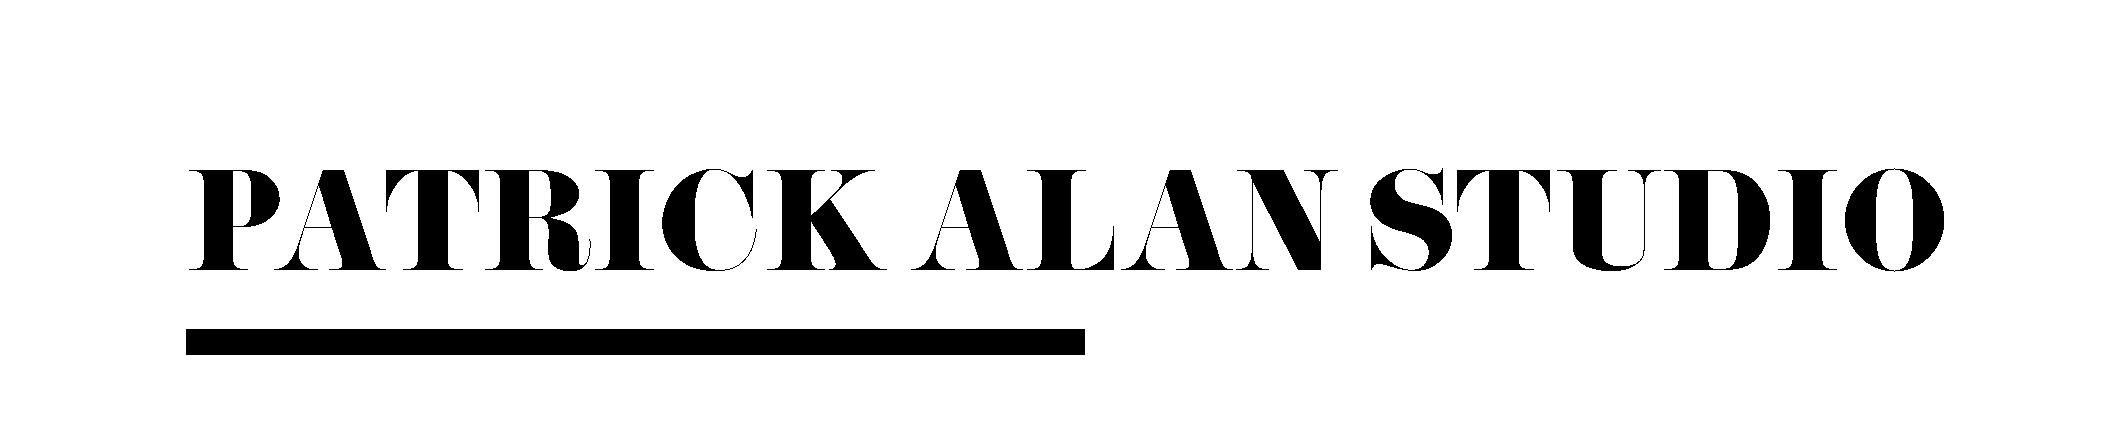 Patrick Alan Studio logo